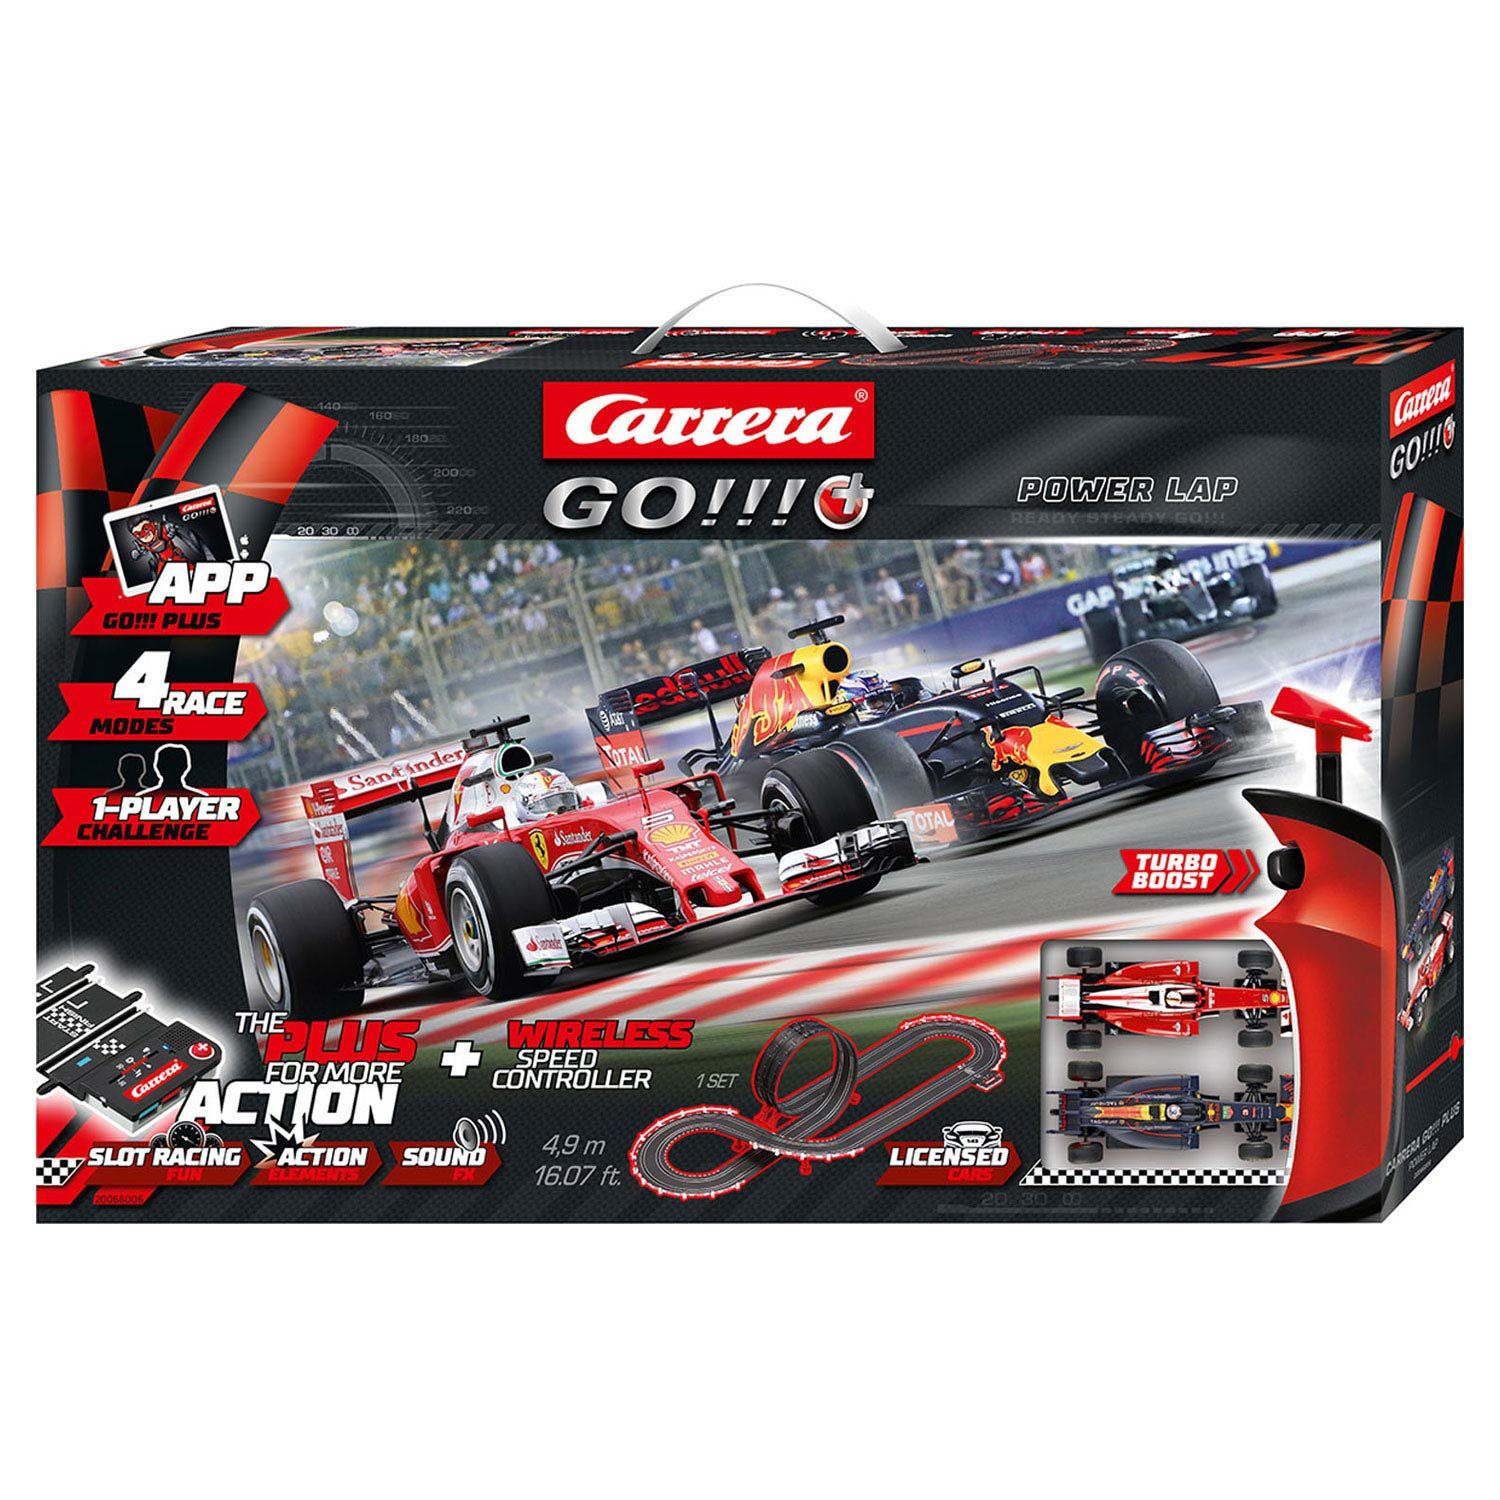 https://www.jouetprive.com/media/catalog/product/cache/b53f5701c29652b6c3eaff90fe1214f0/image/334501c08/carrera-go-plus-race-track-power-lap.jpg